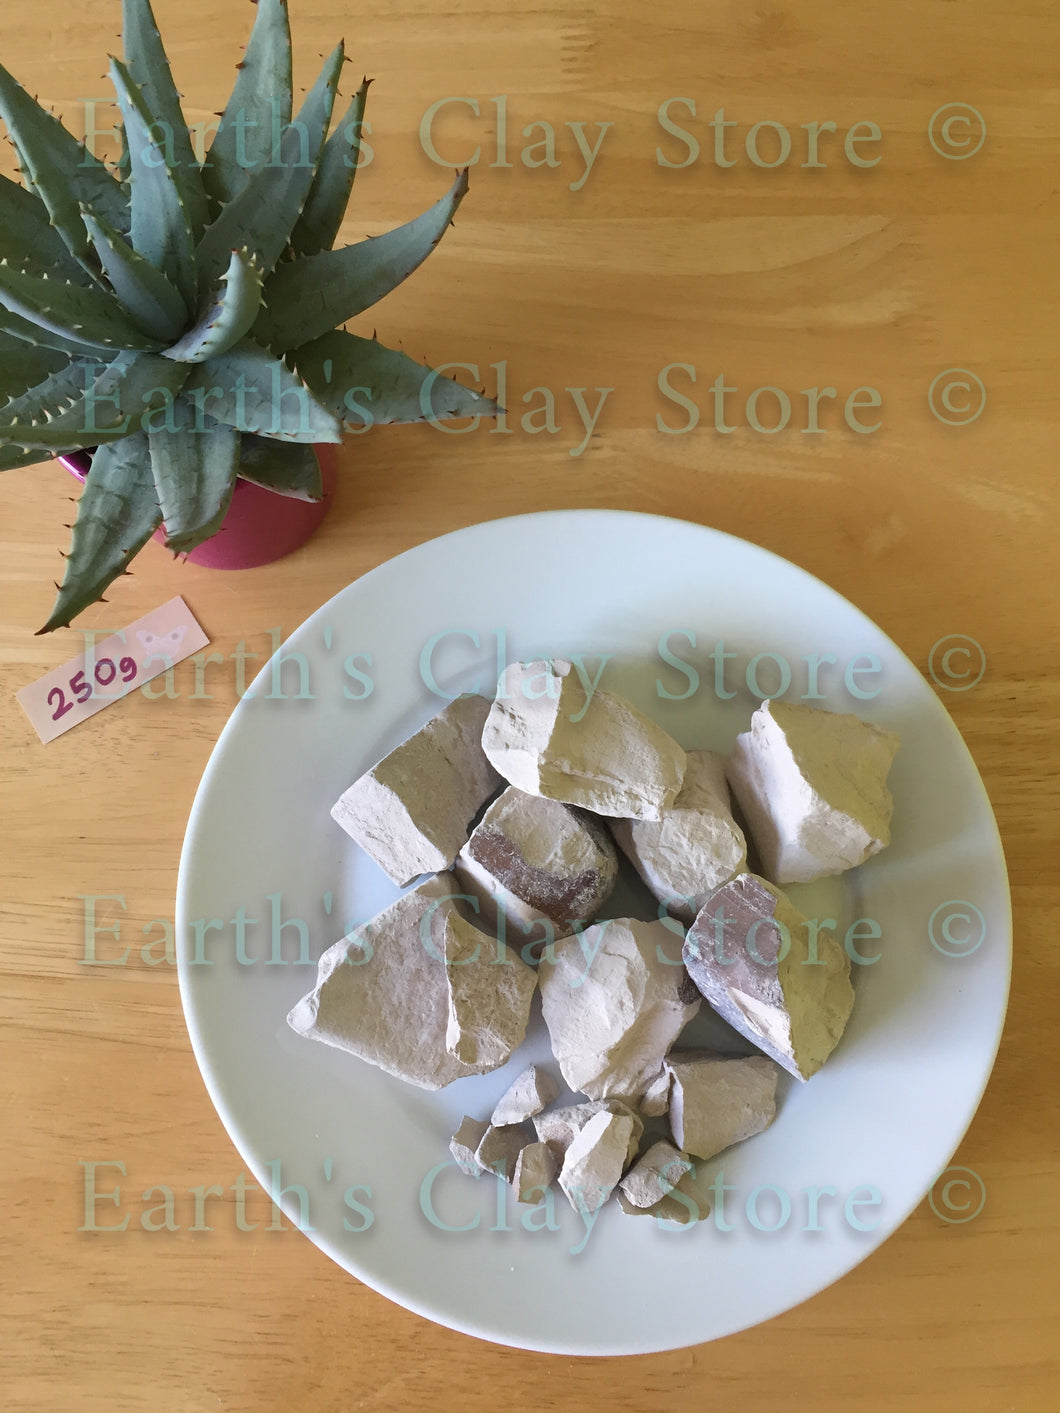 Stream +256 702869147 Edible Clay (Ebumba) Herbal exporter to USA, Canada,  Europe by crane scls